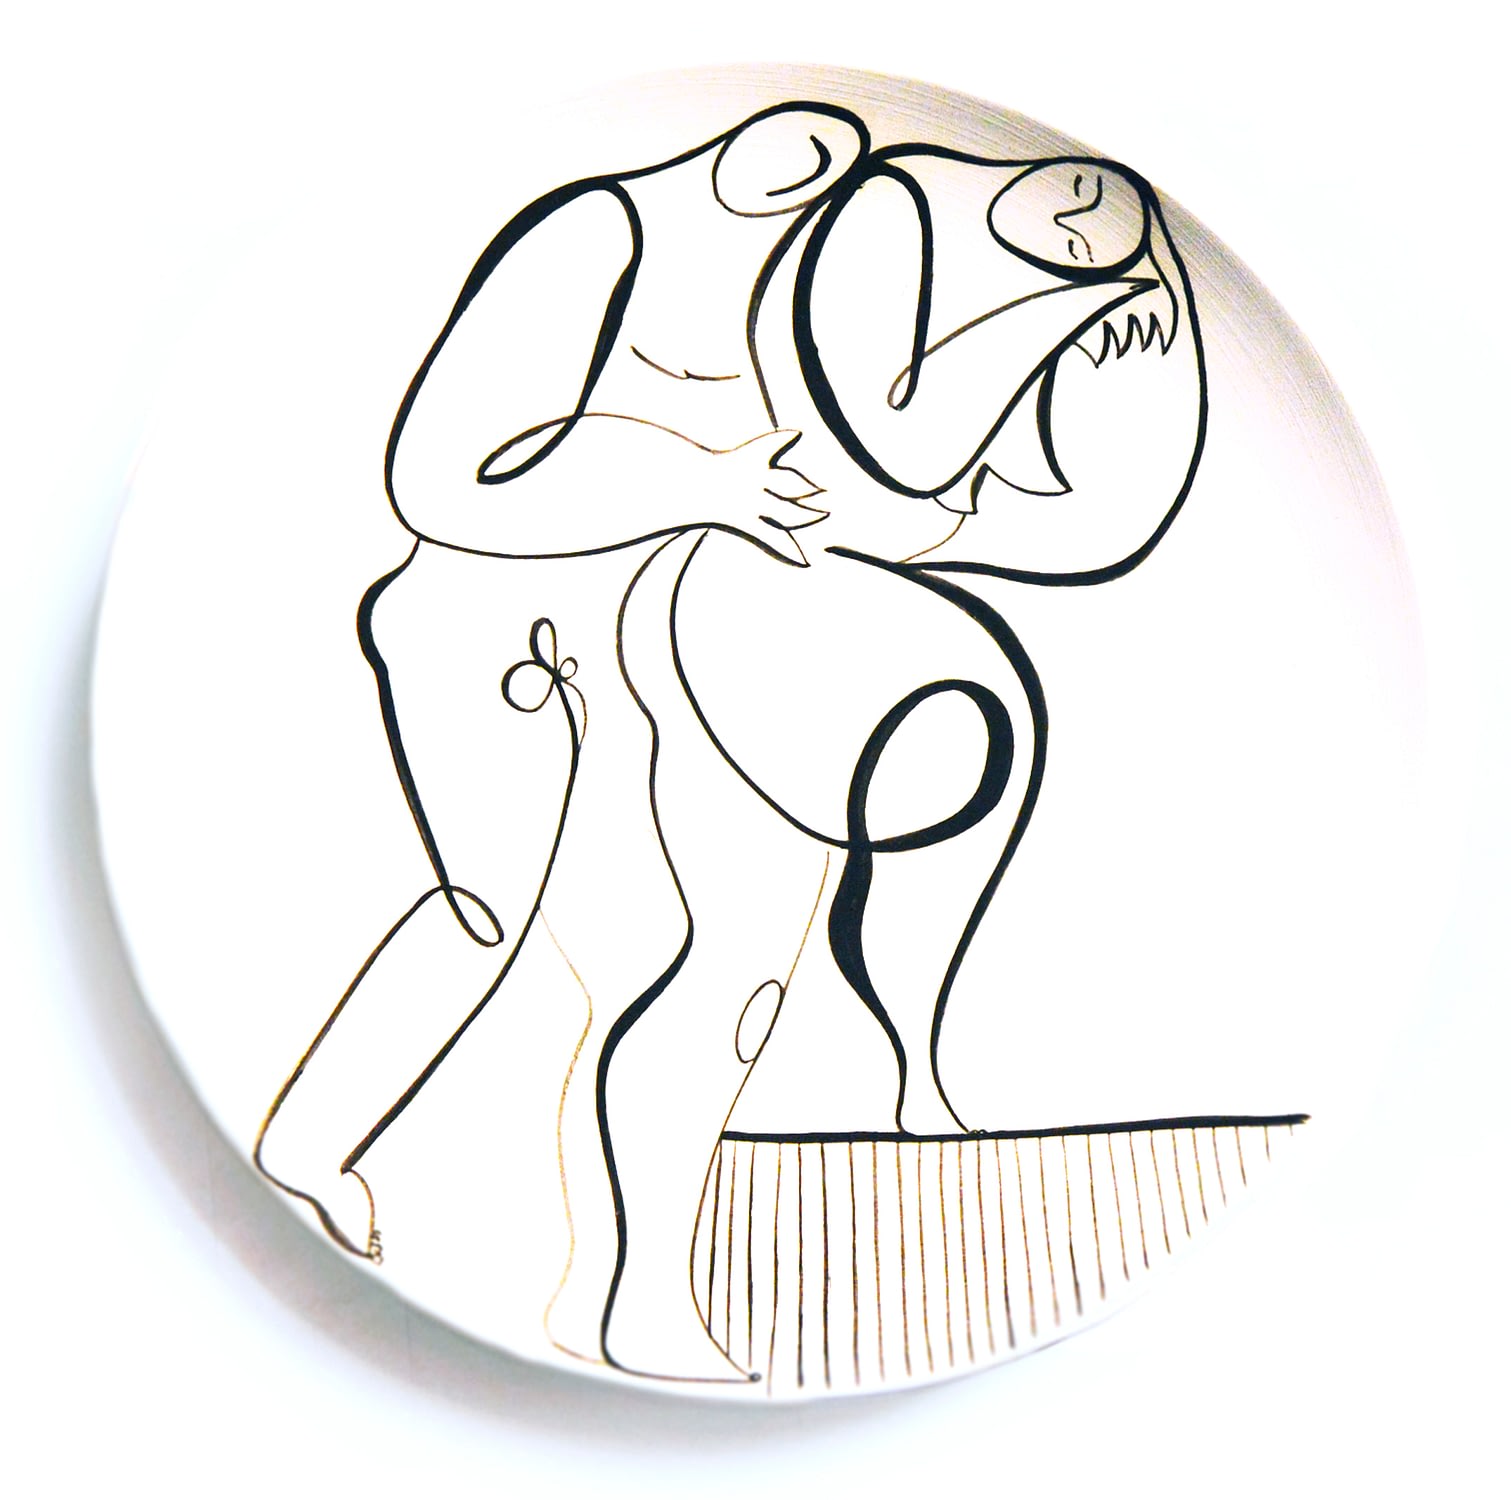 Andrea Santamarina Contemporary artist spain Art Gallery artistic ceramic drawing plates Love 10